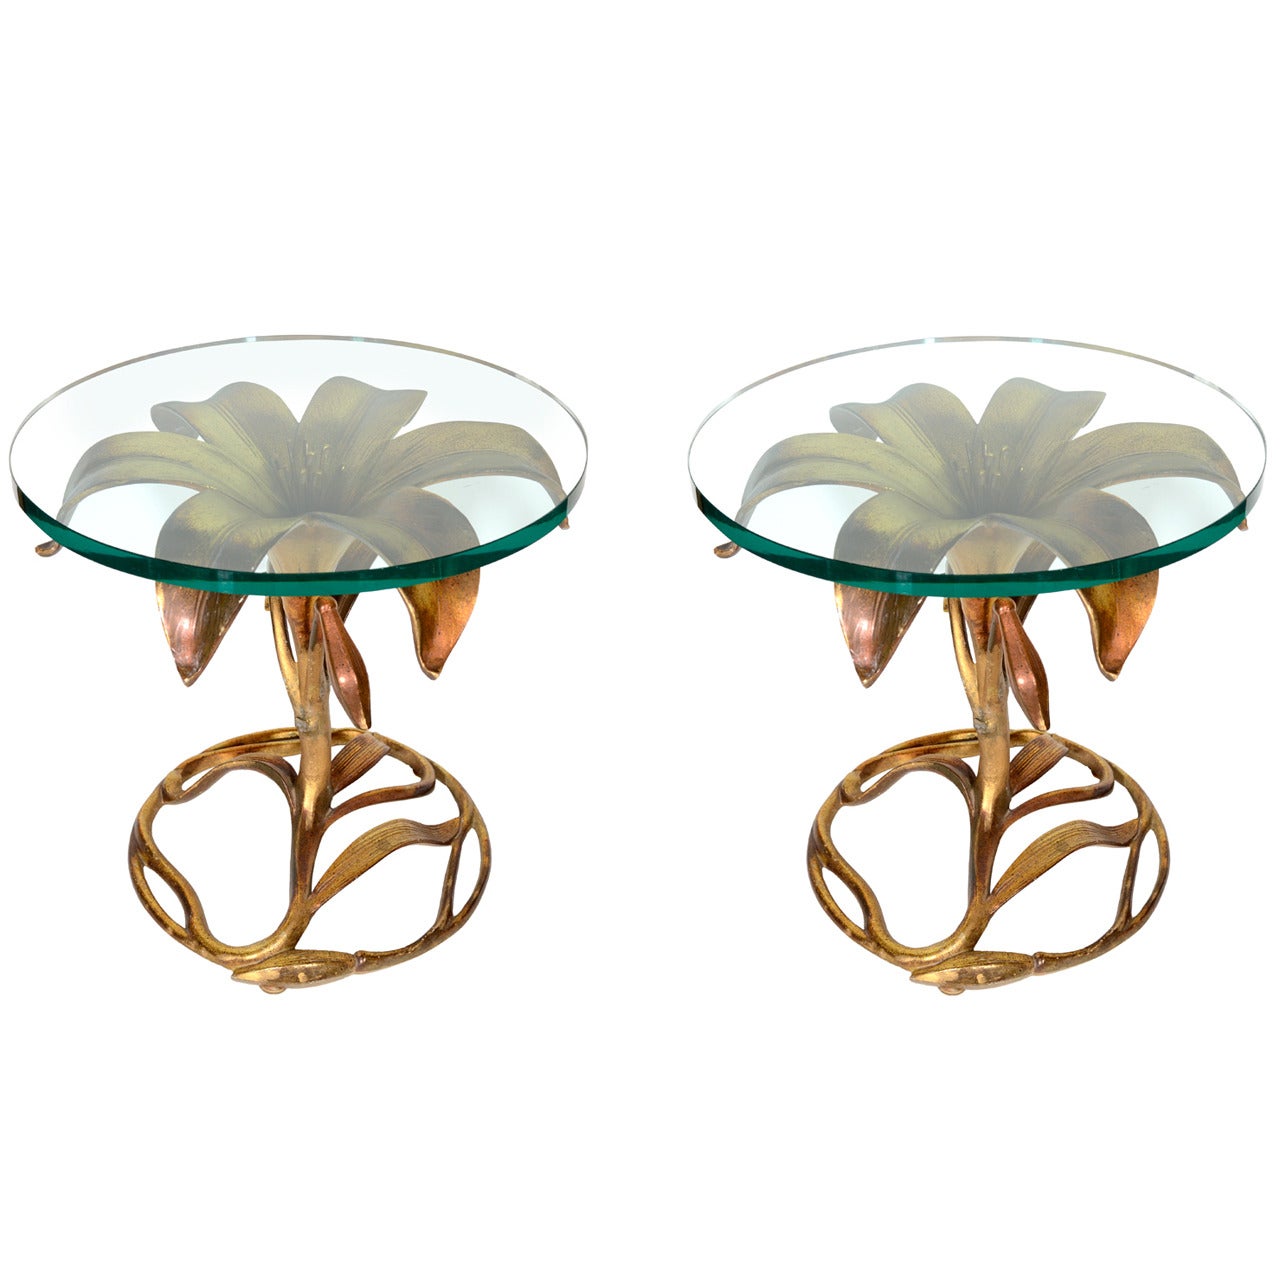 Art Nouveau Style Sculpted Lily Side Table Designed by Arthur Court